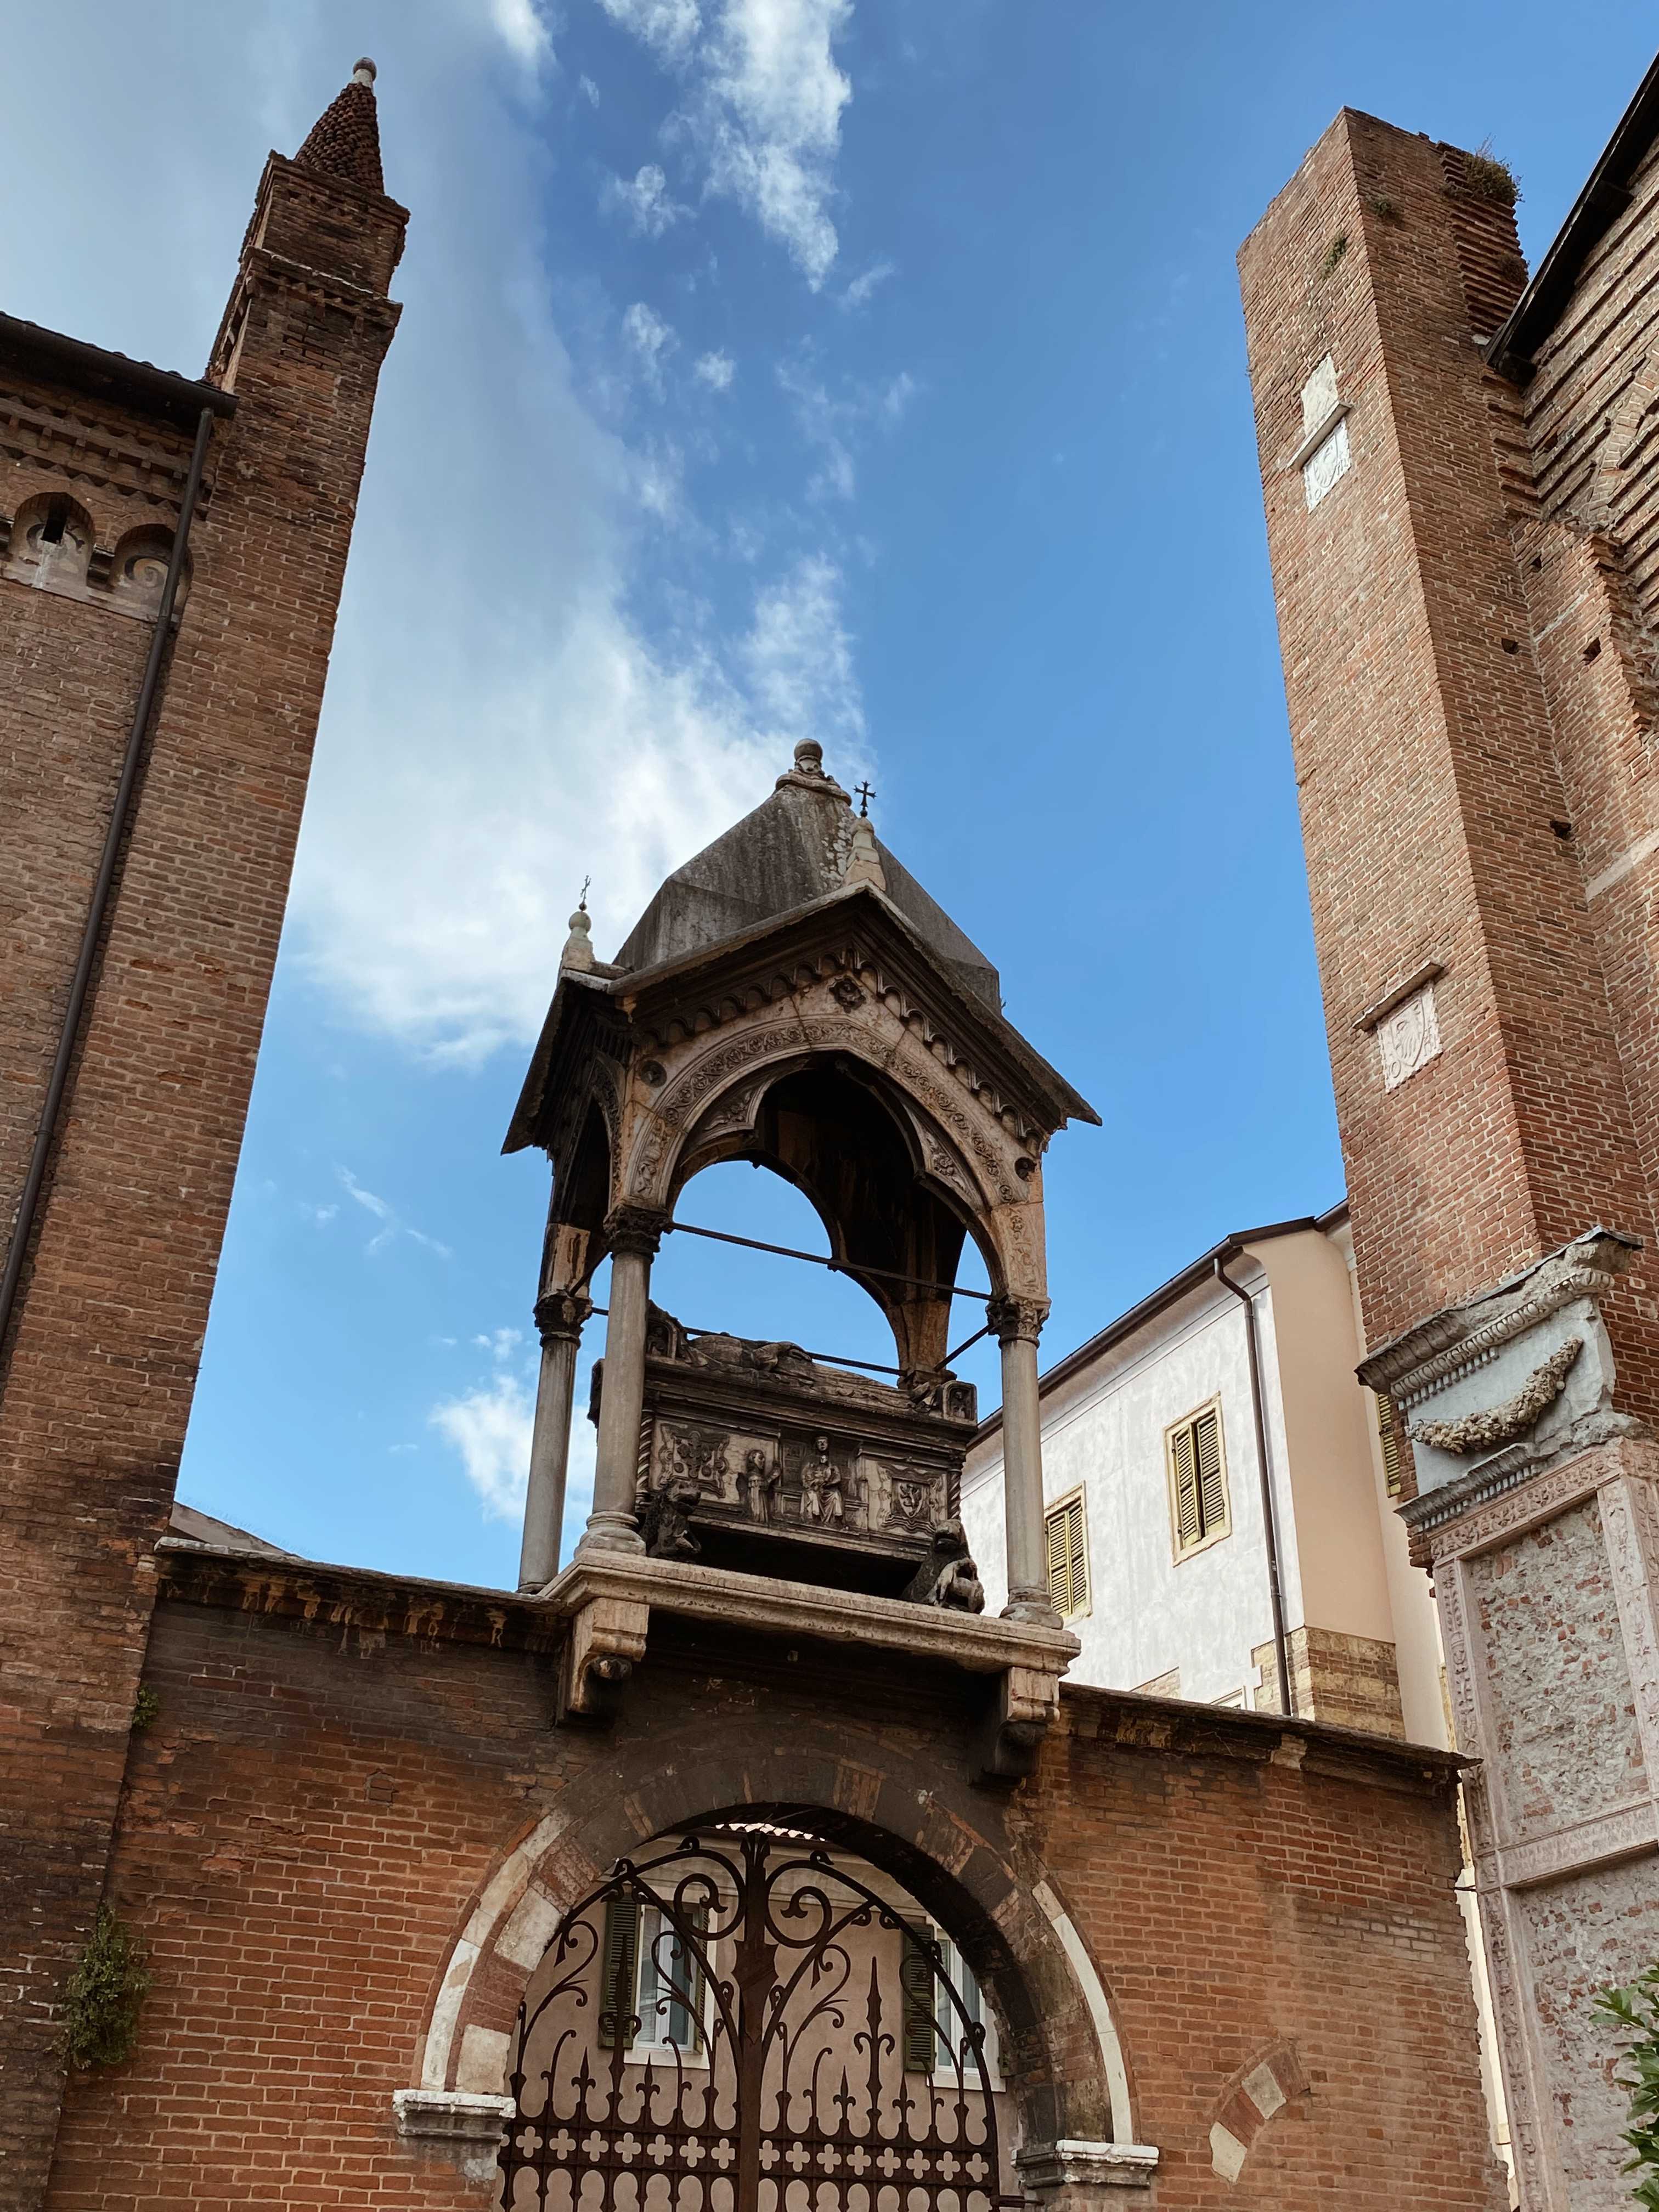 La Basilica di Santa Anastasia, Verona